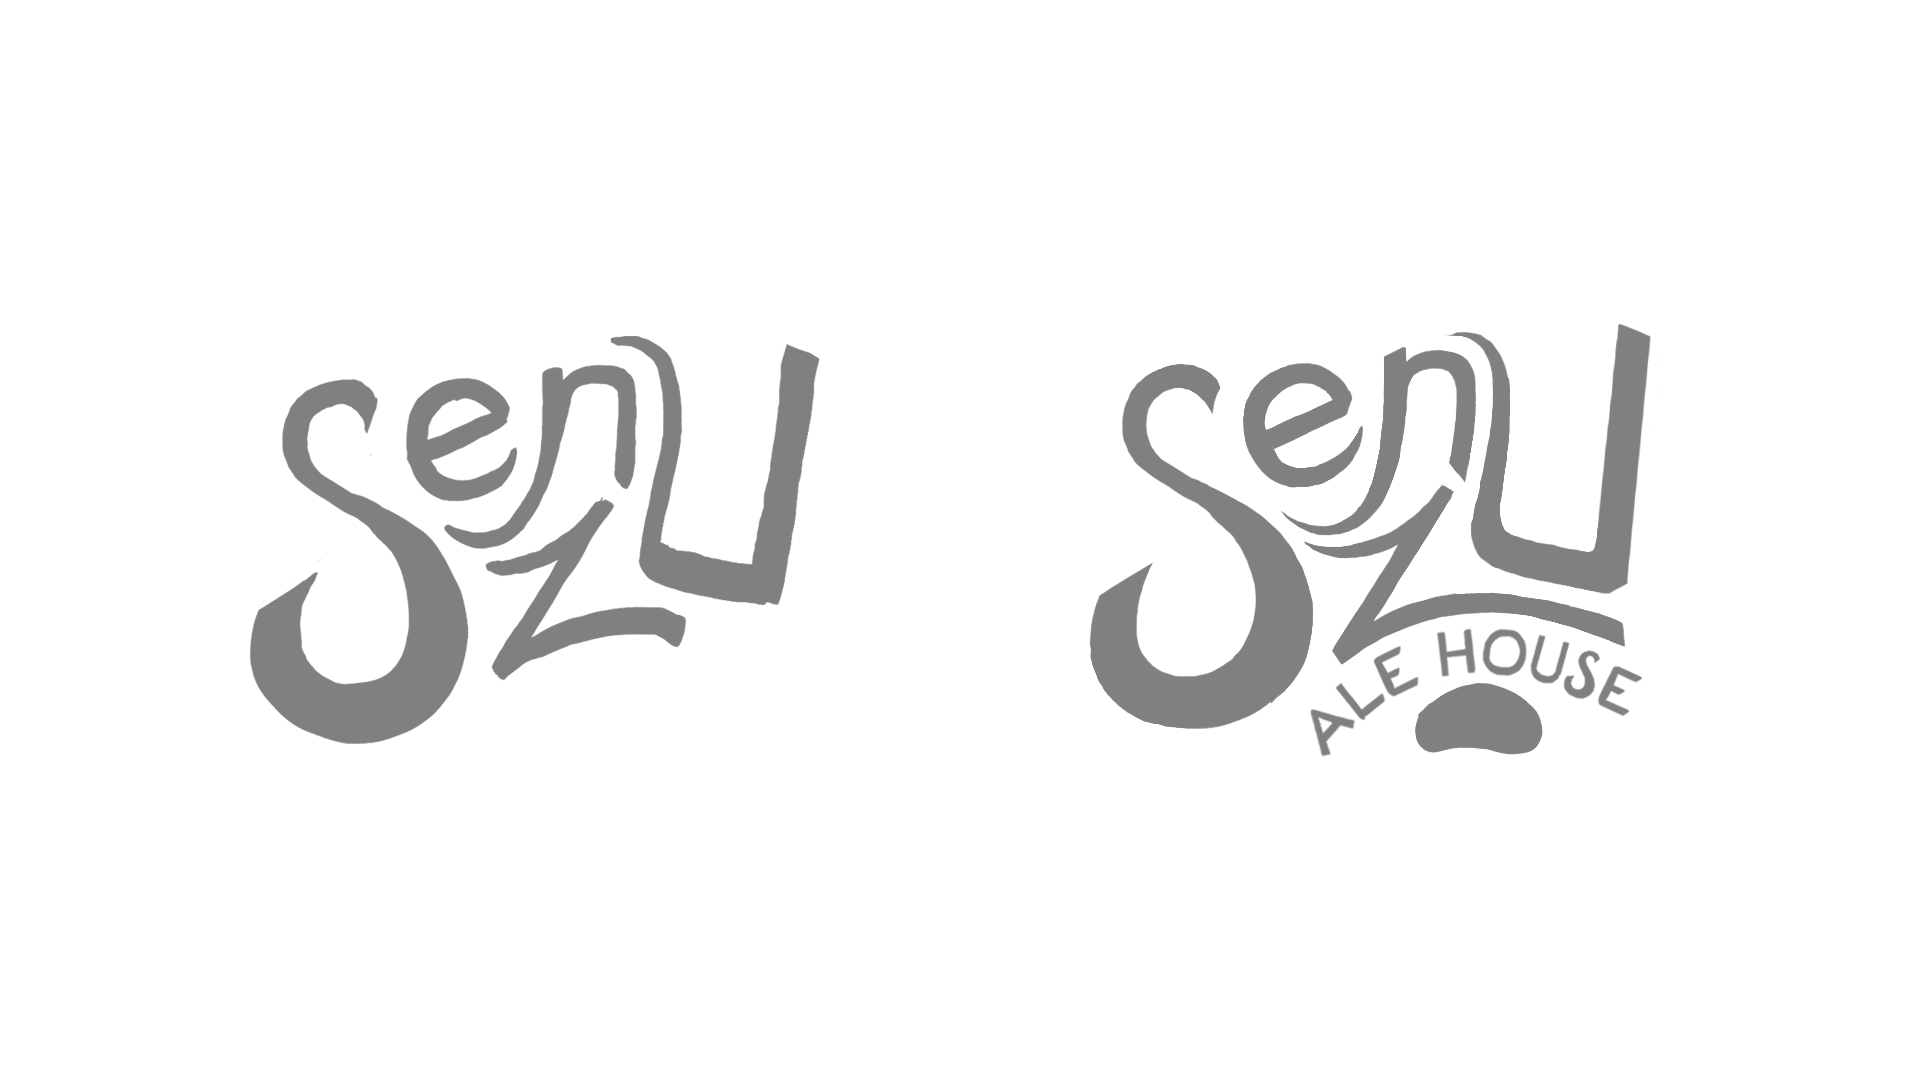 Senzu Ale House refined logo sketch